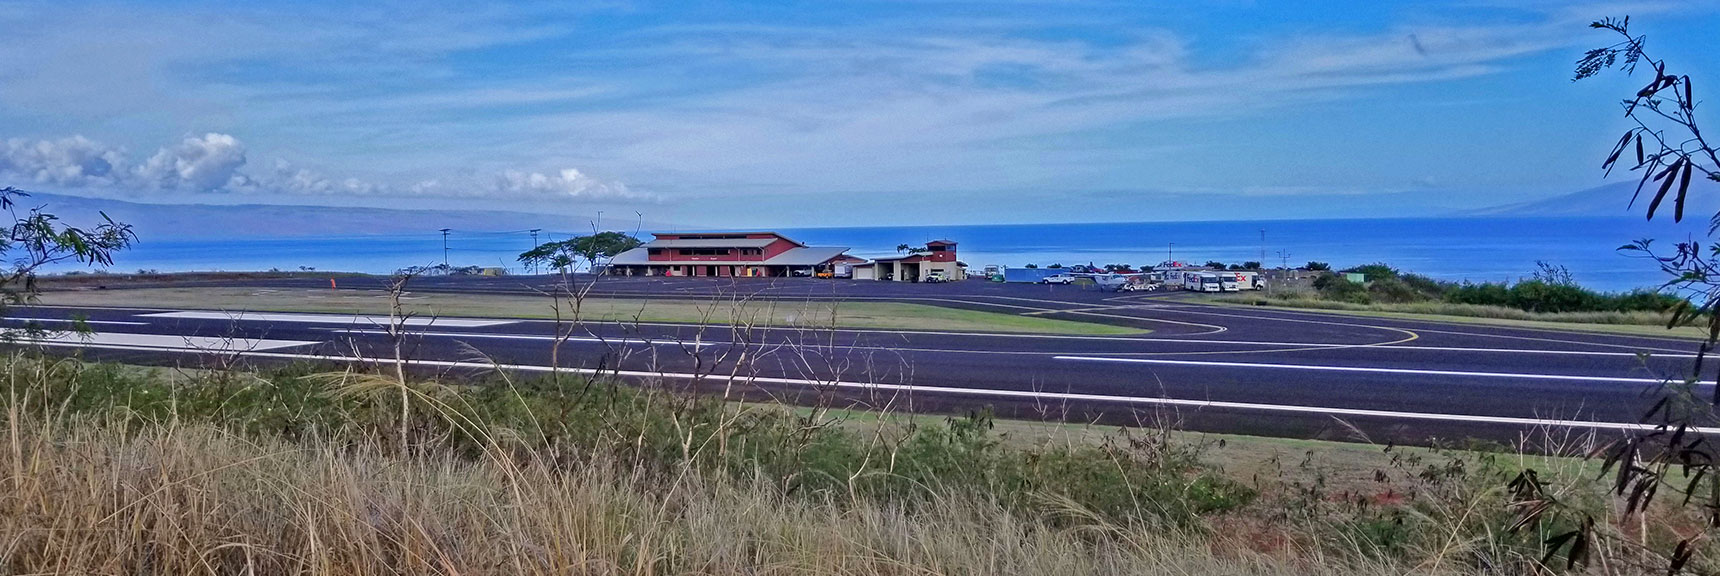 Kapalua Maui Airport Terminal and Runway | Hidden Hills and Jungle Above Kahana in West Maui, Hawaii